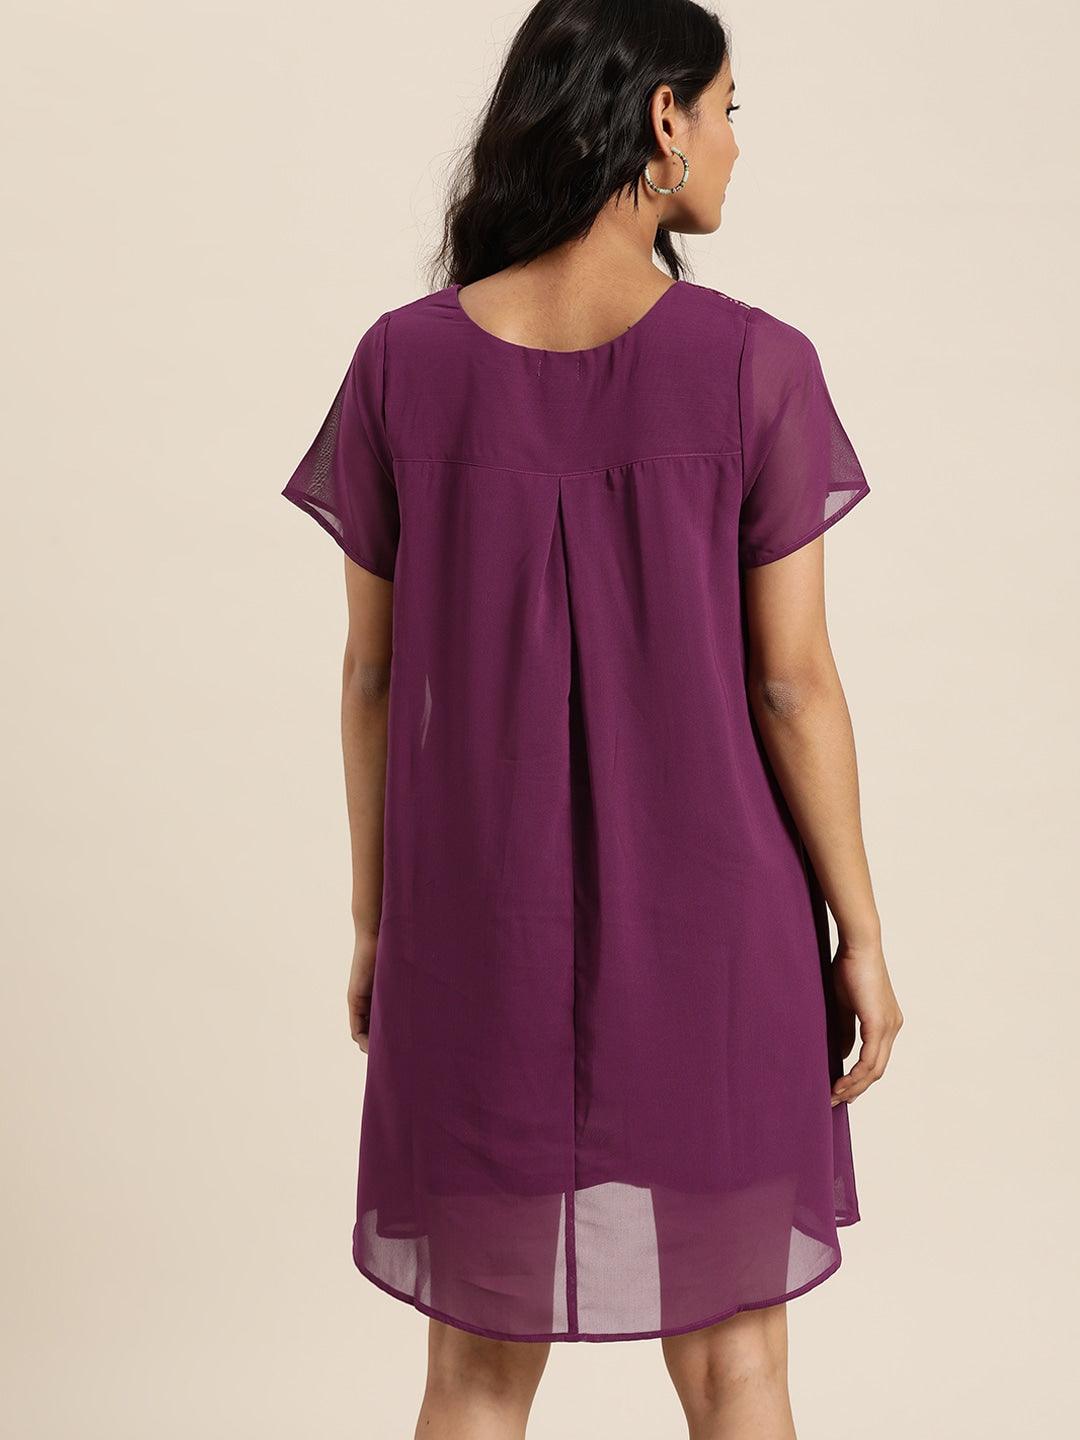 Qurvii Women Purple Solid A-Line Dress - Qurvii India